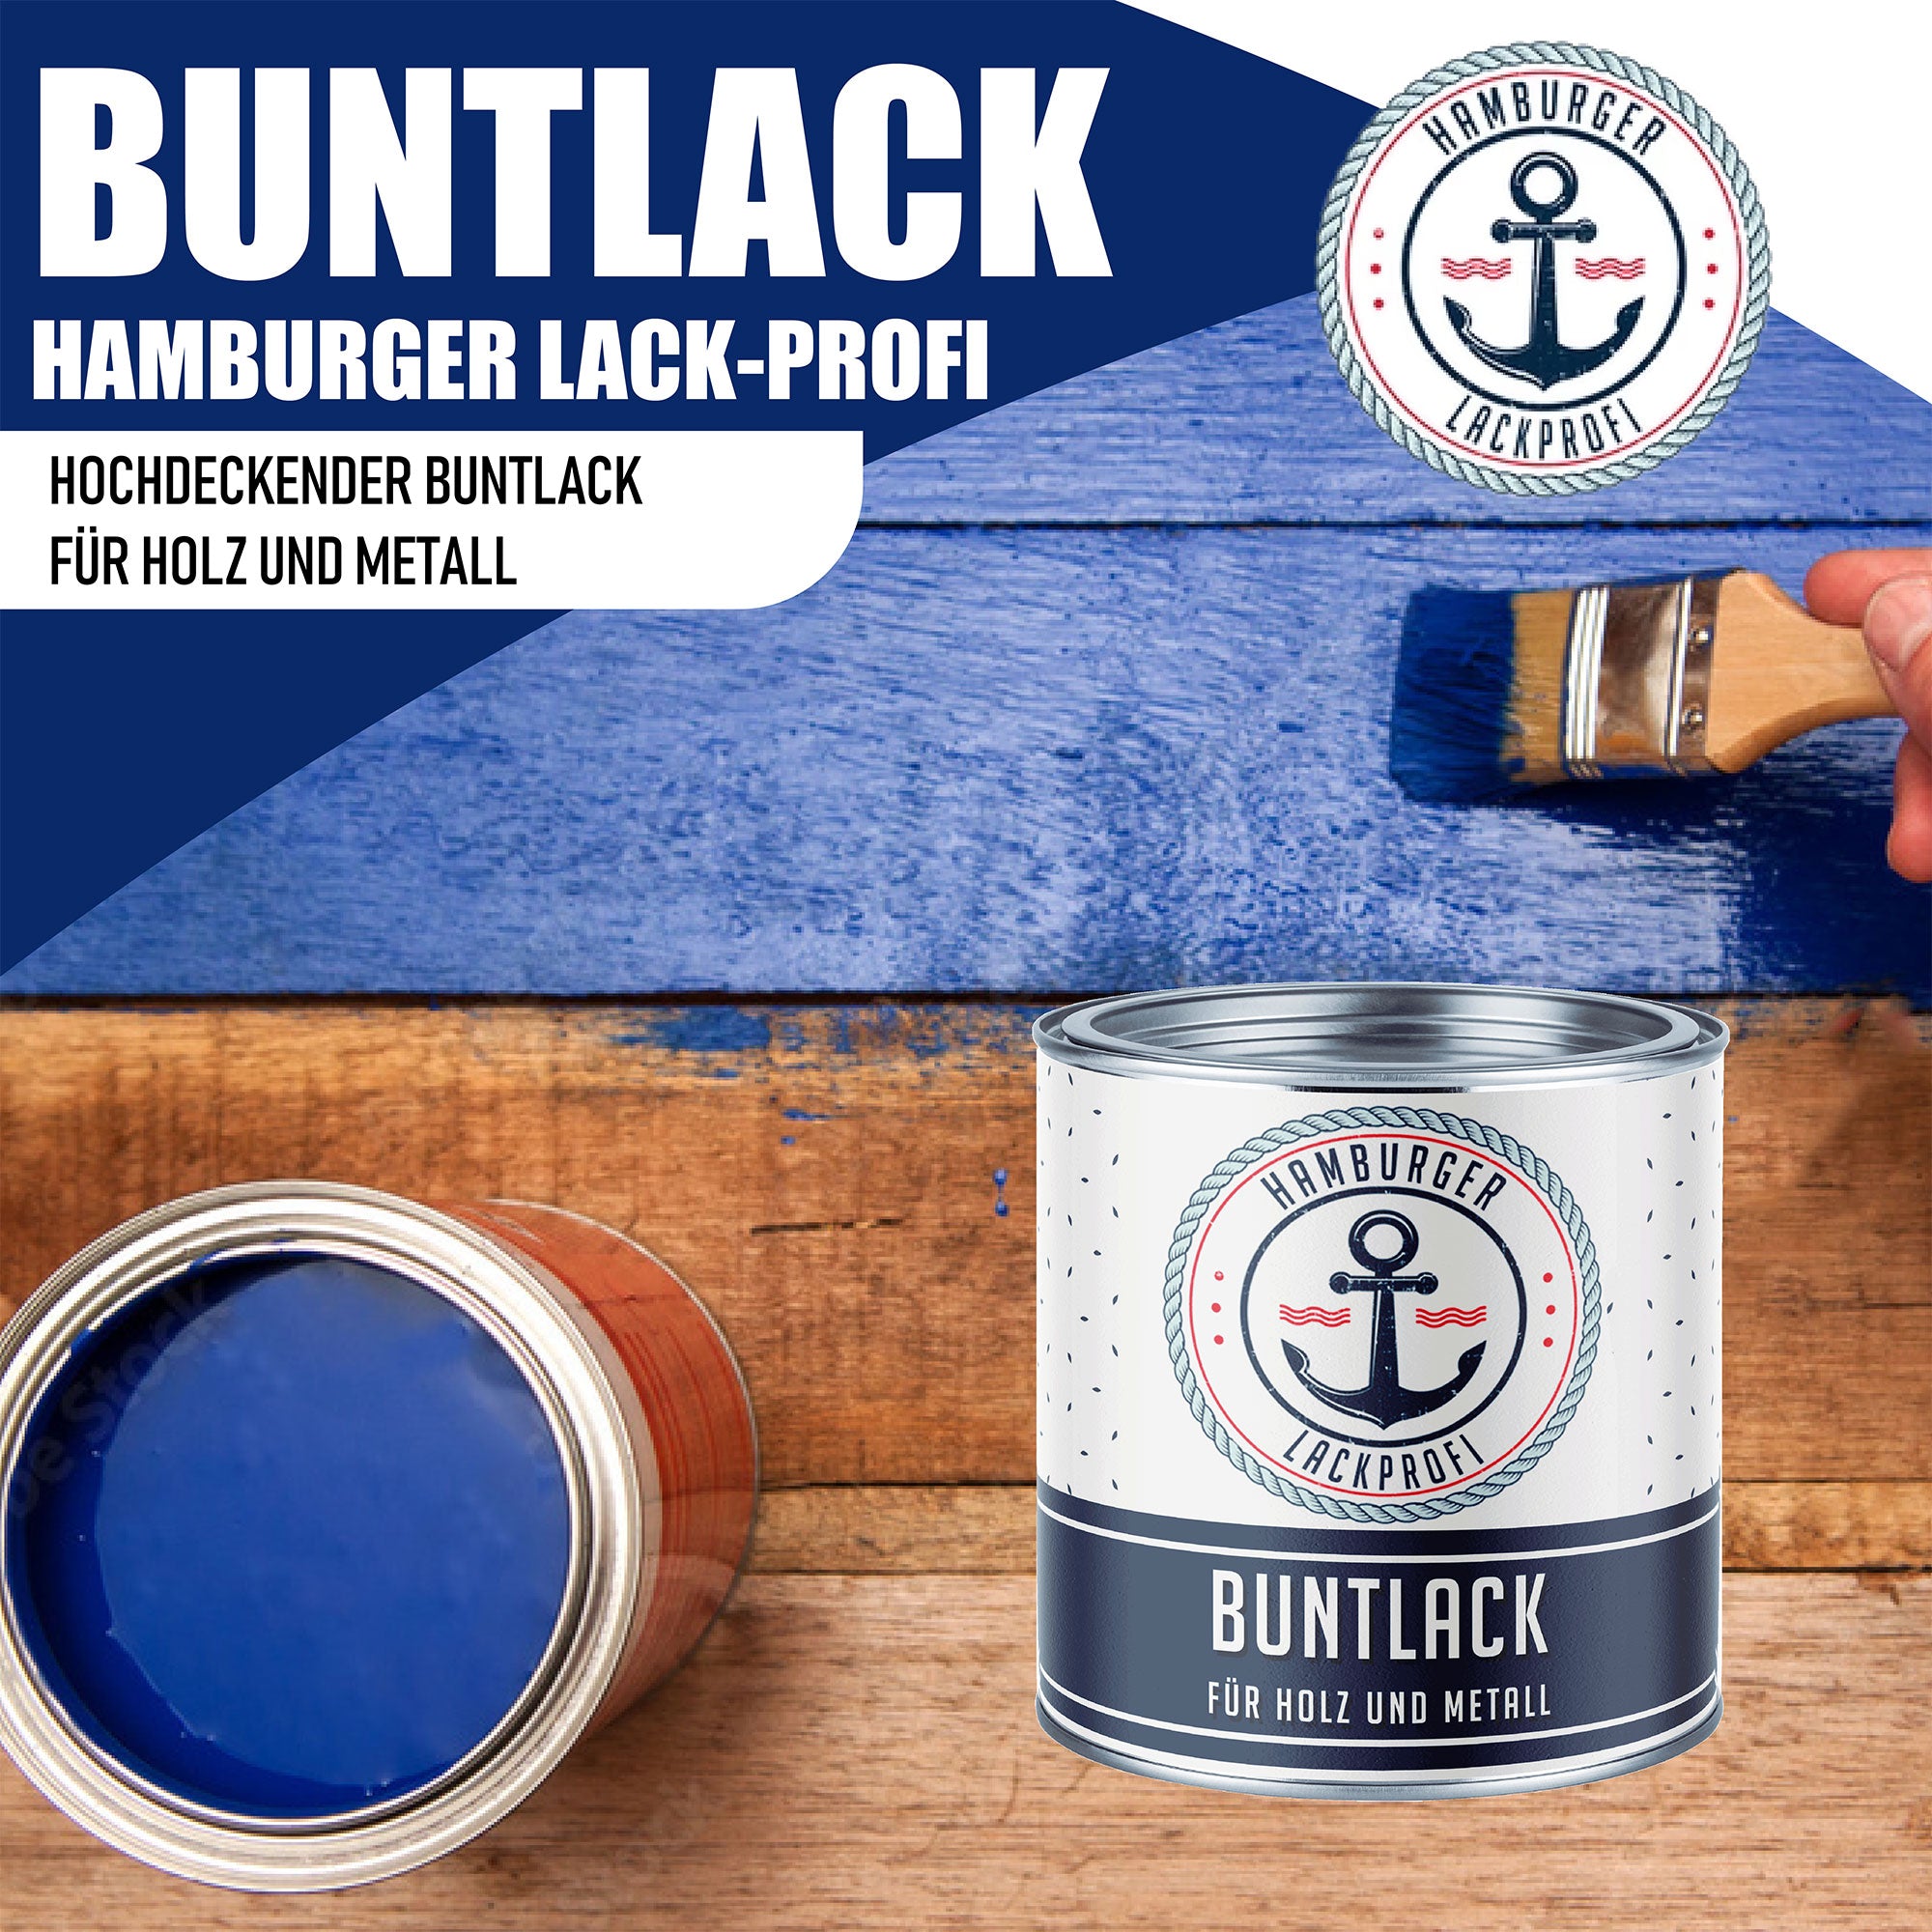 Hamburger Lack-Profi Buntlack Oxidrot RAL 3009 - Robuster Kunstharzlack